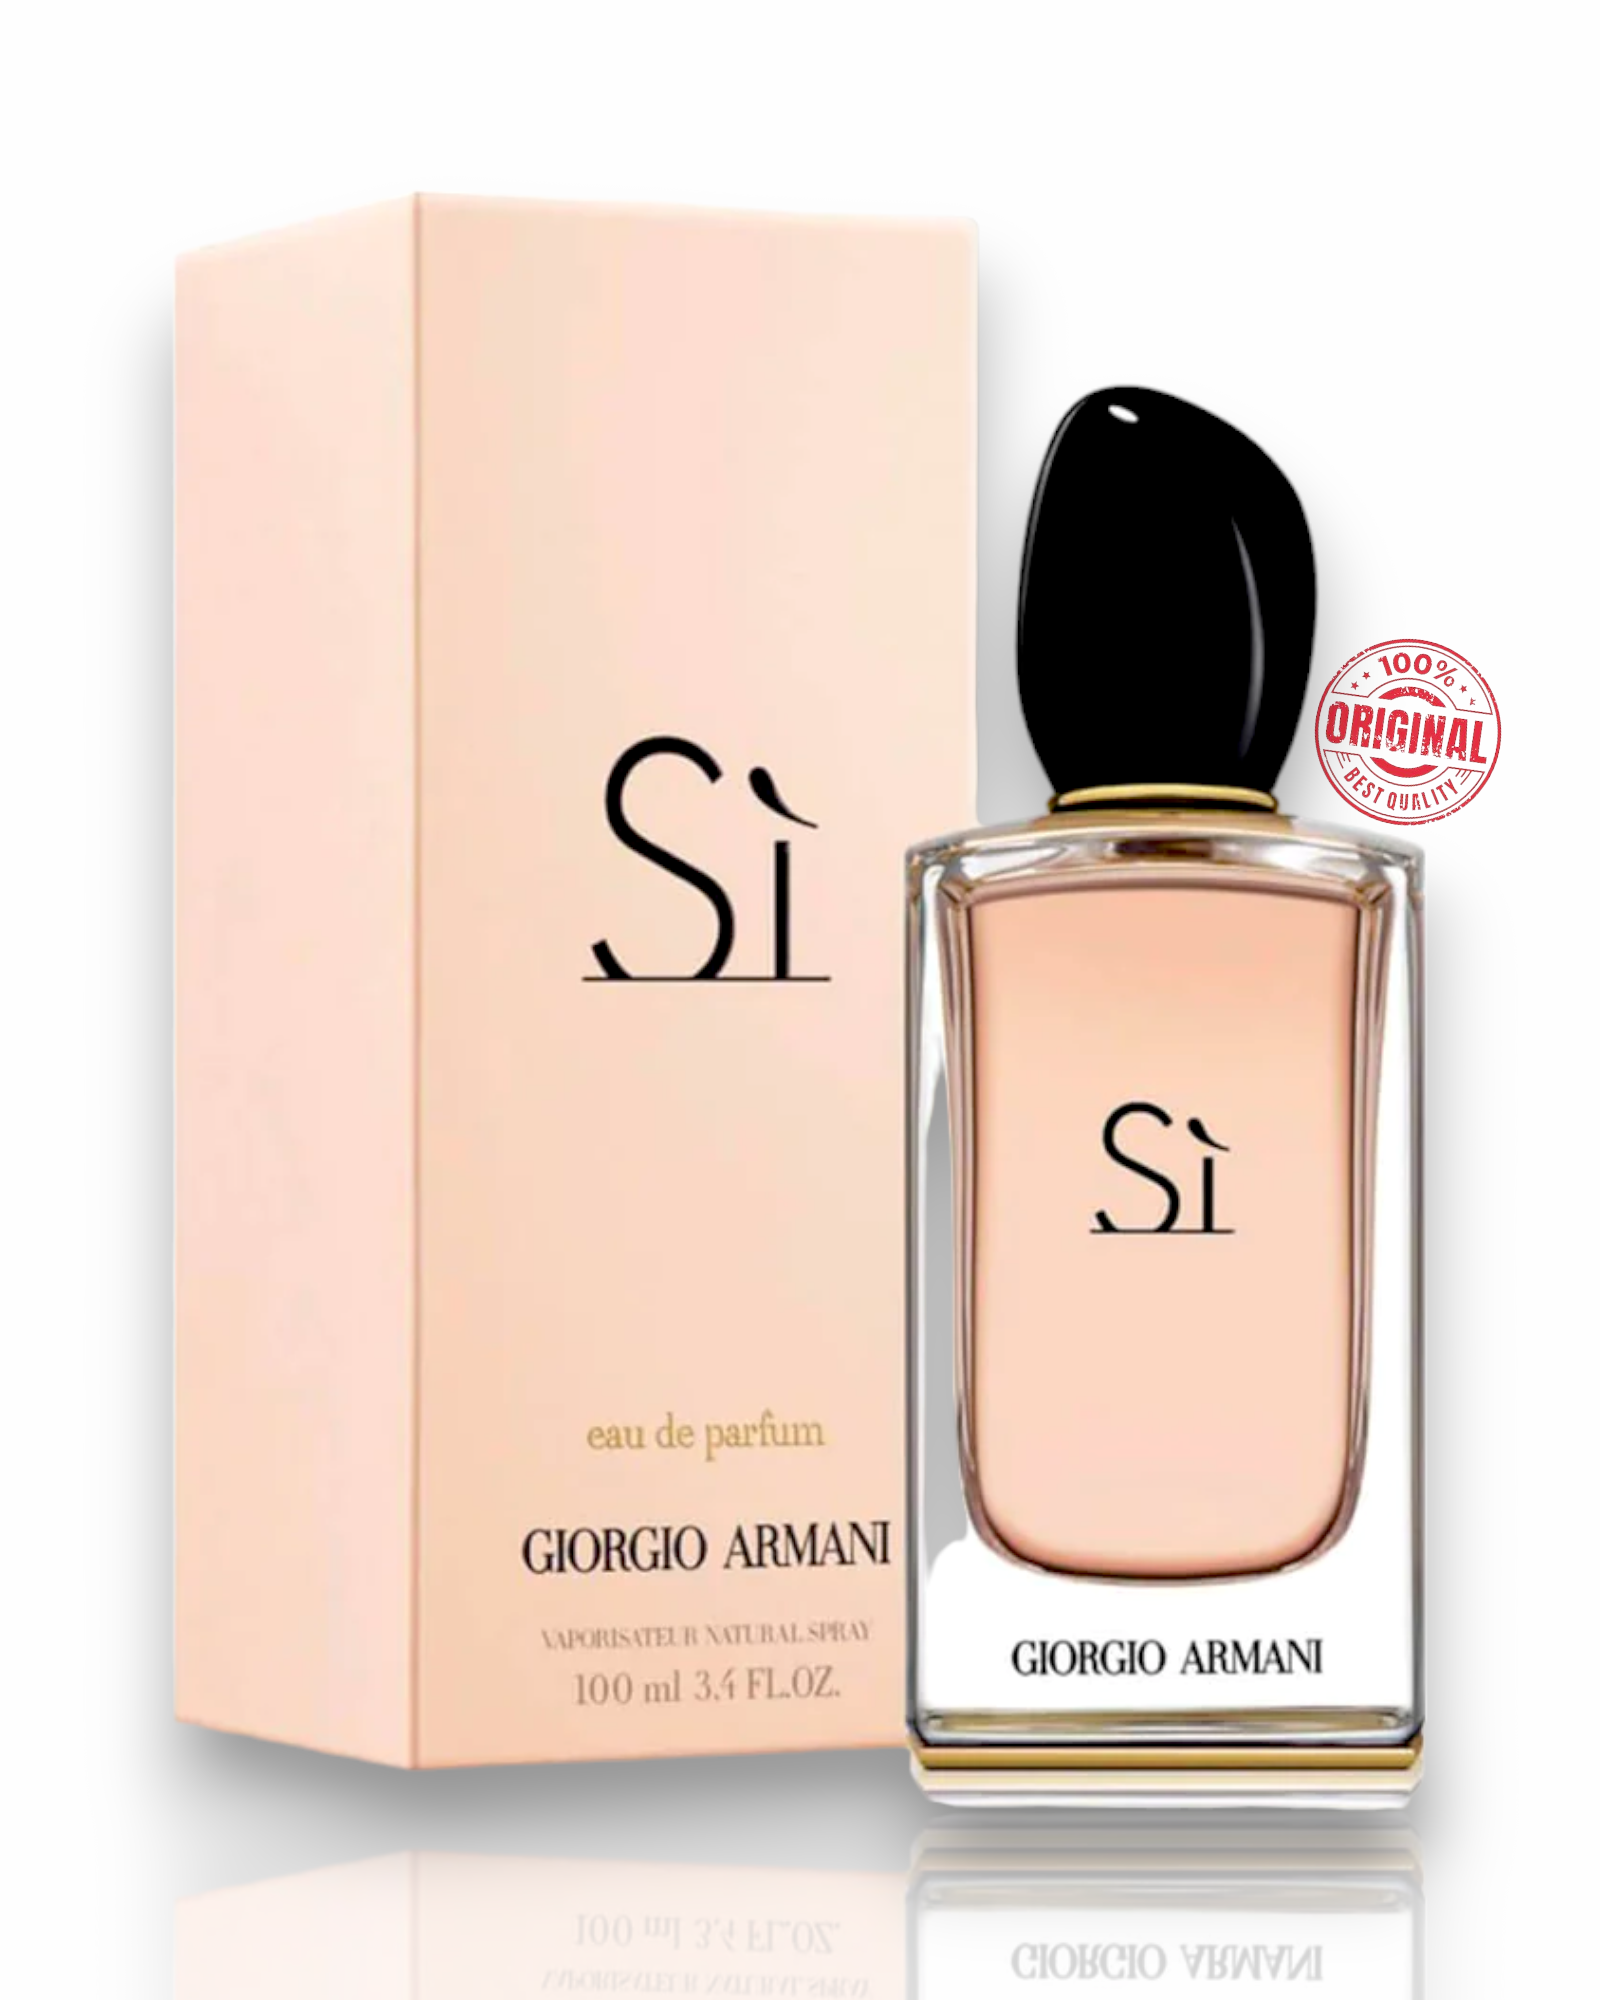 Giorgio Armani Si Eau De Parfum 100ml - Luxurious Perfume